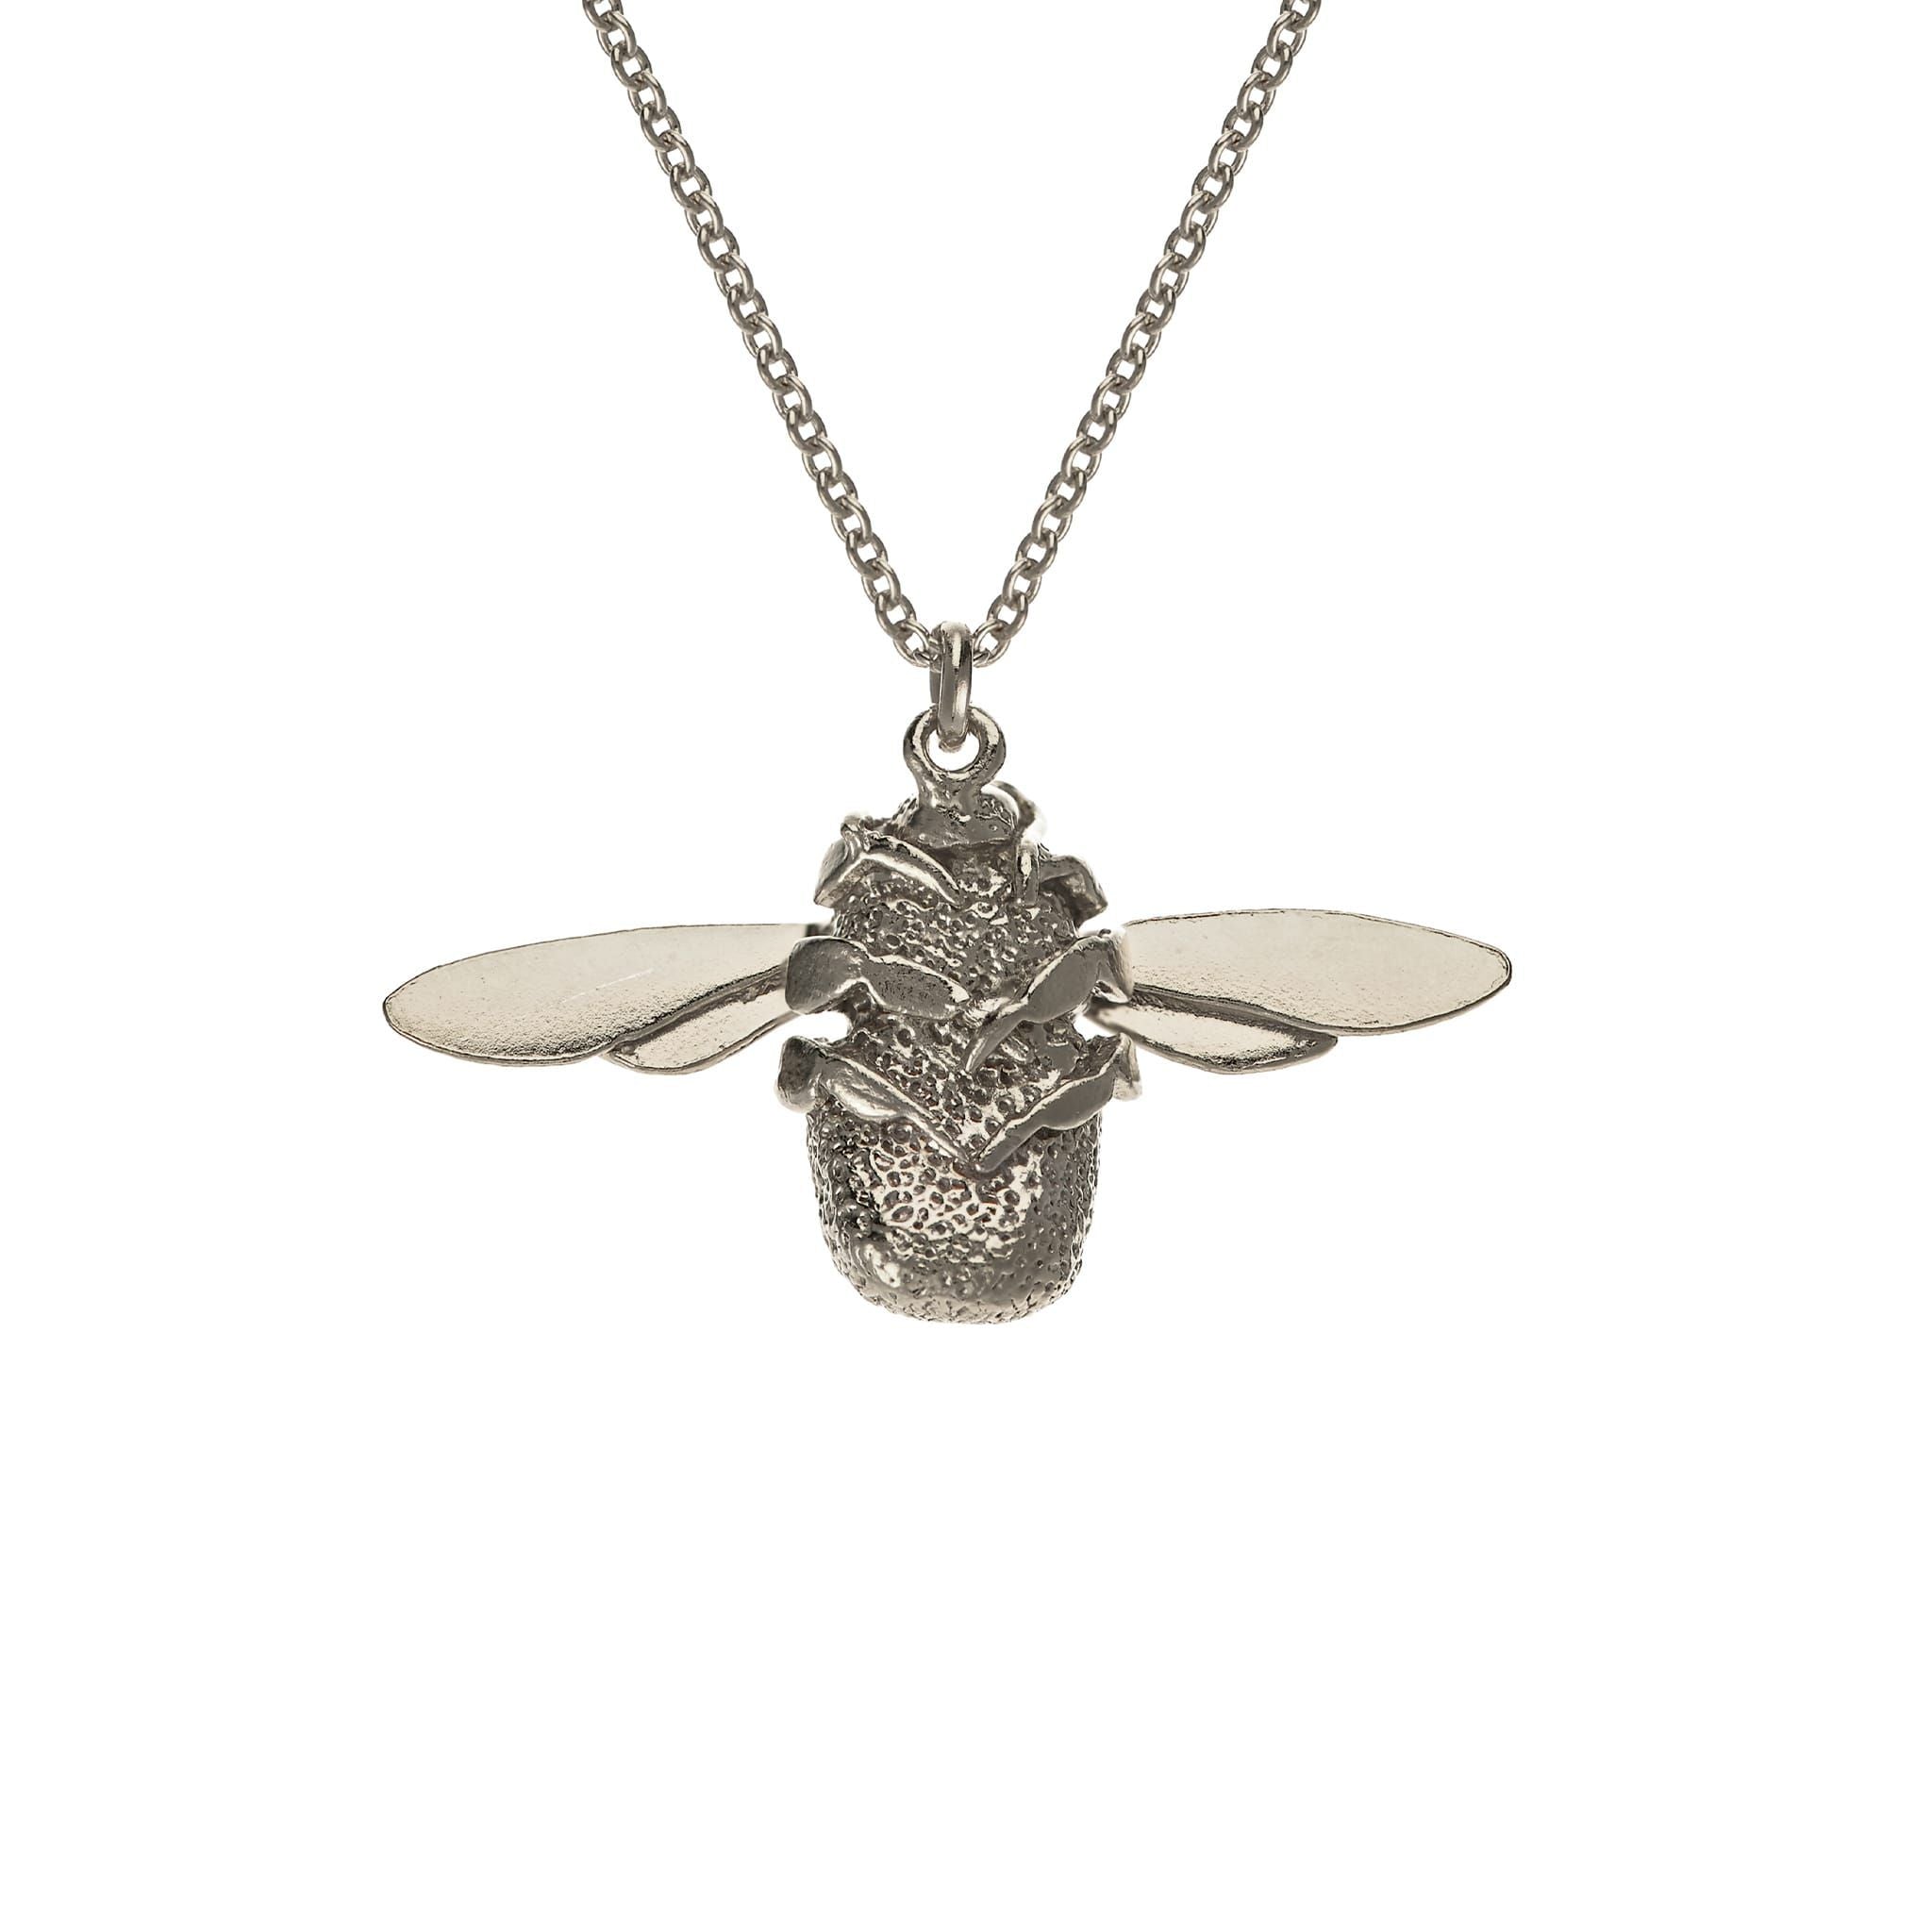 Bumblebee Necklace - Silver